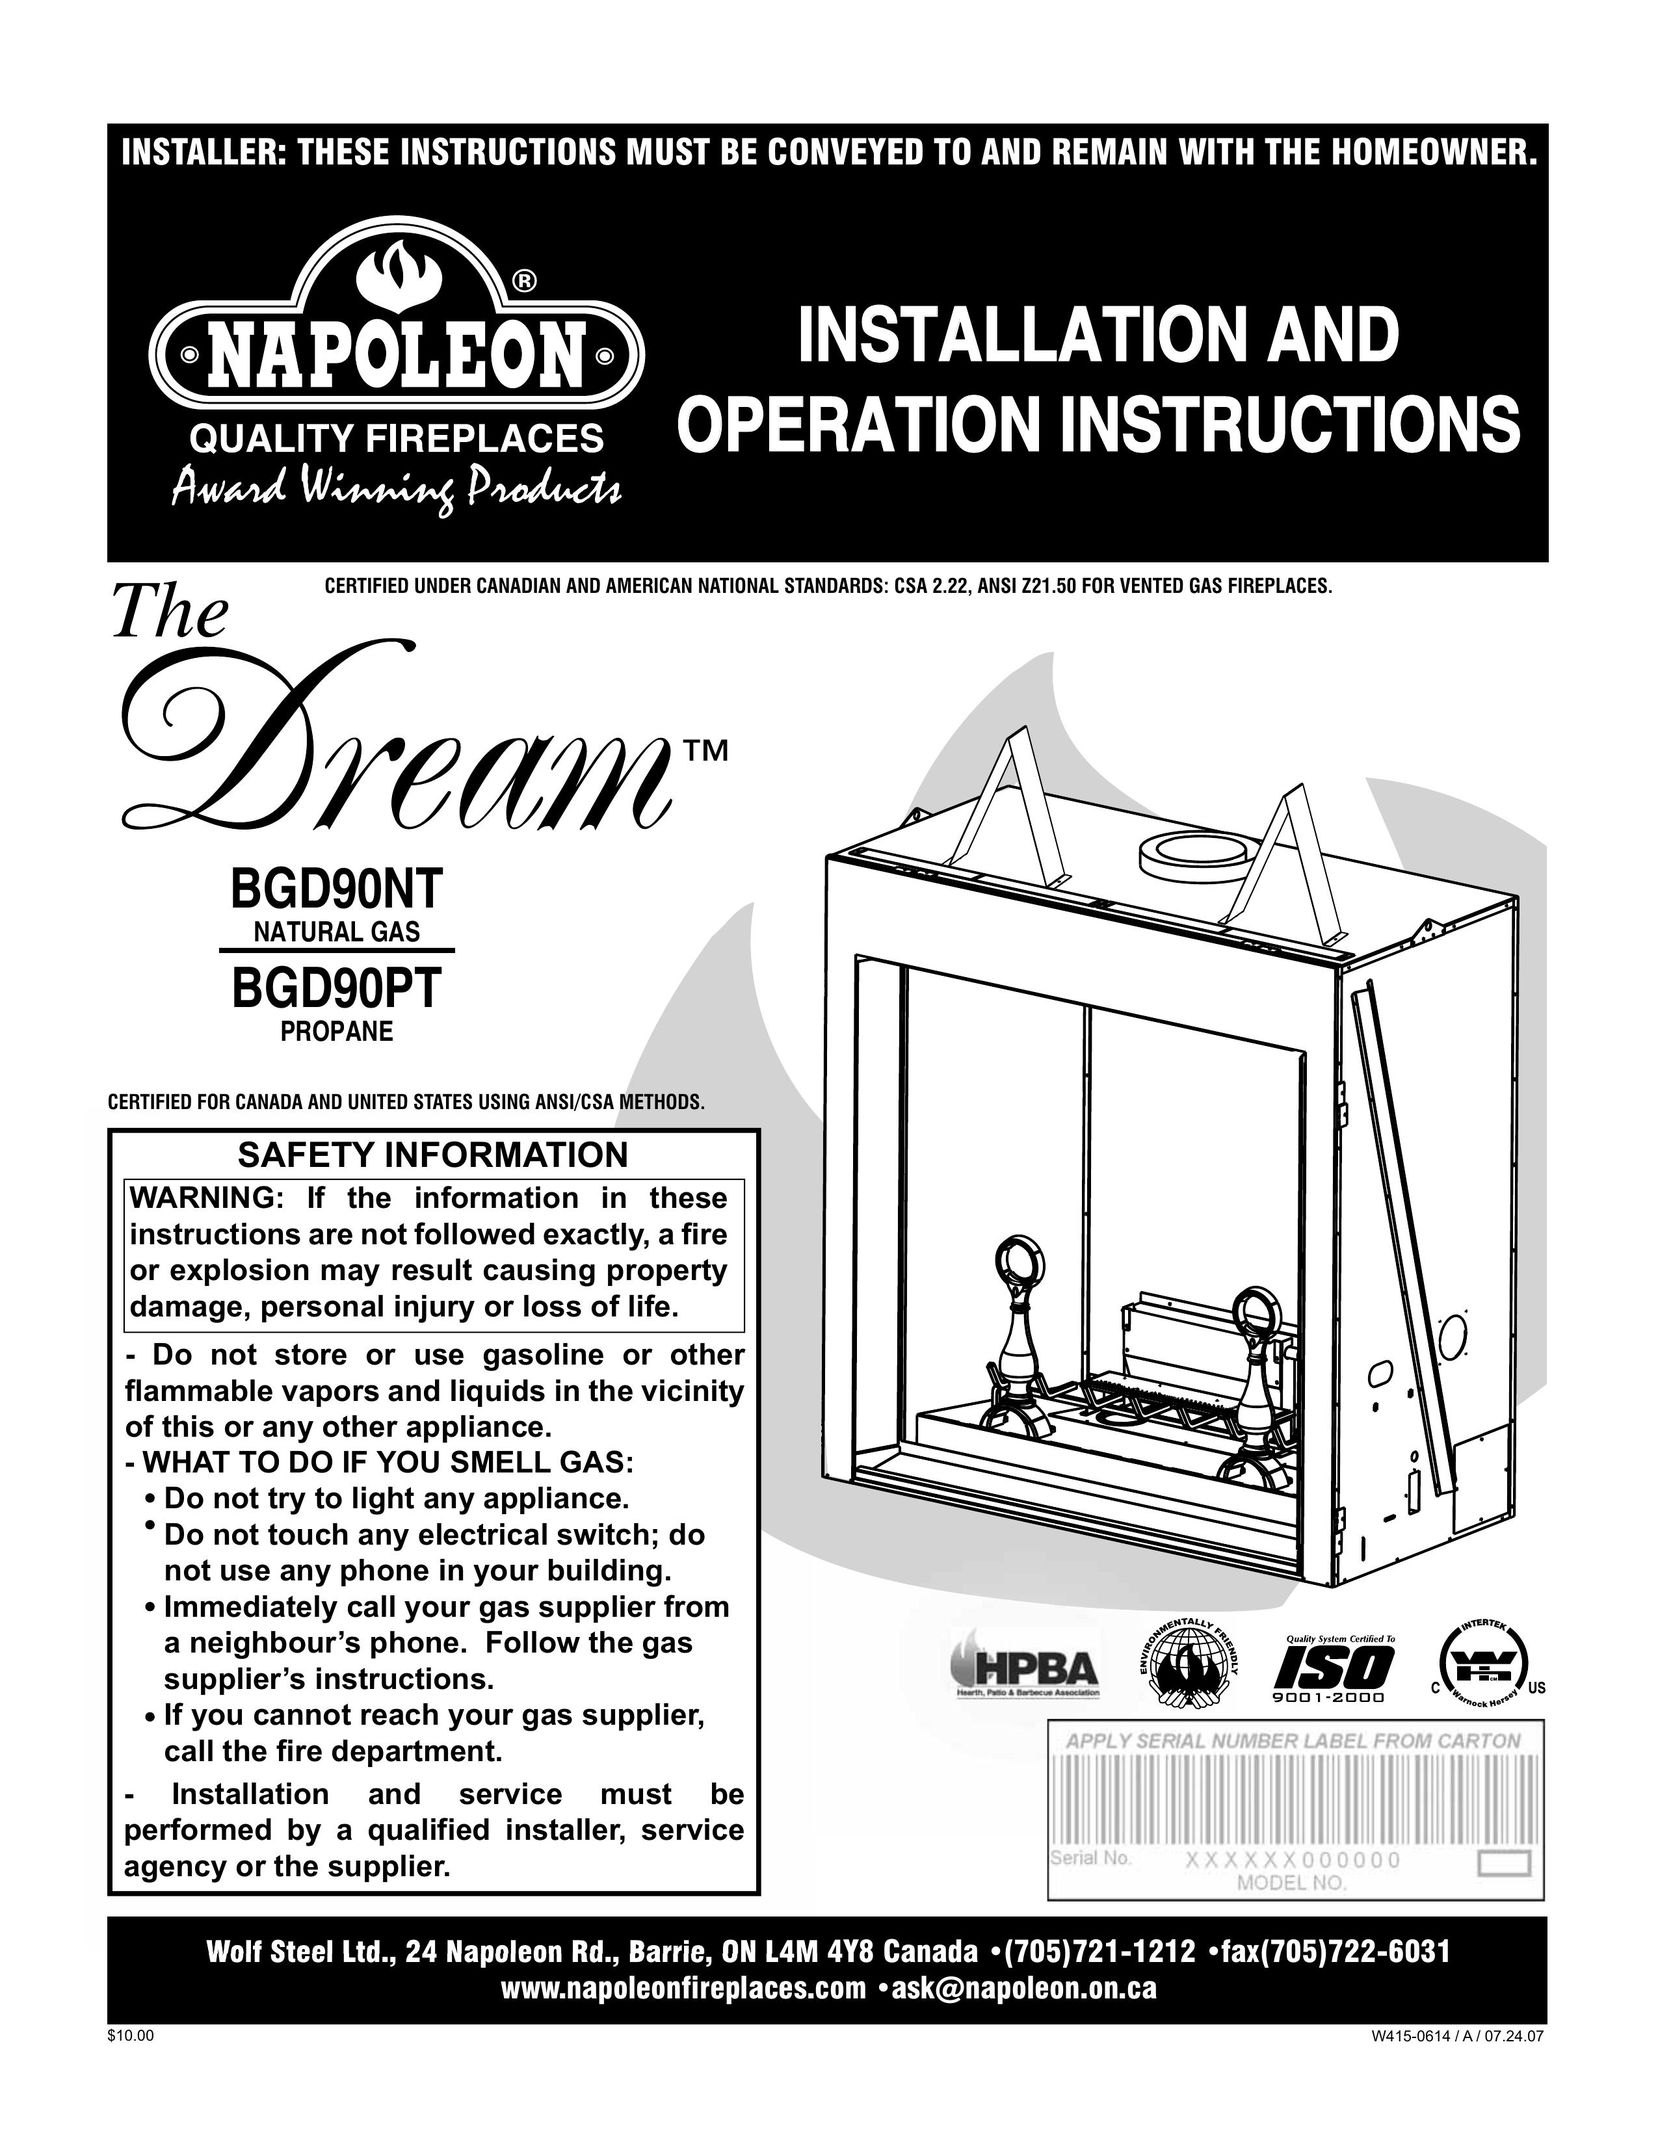 Napoleon Fireplaces BGD90PT Indoor Fireplace User Manual